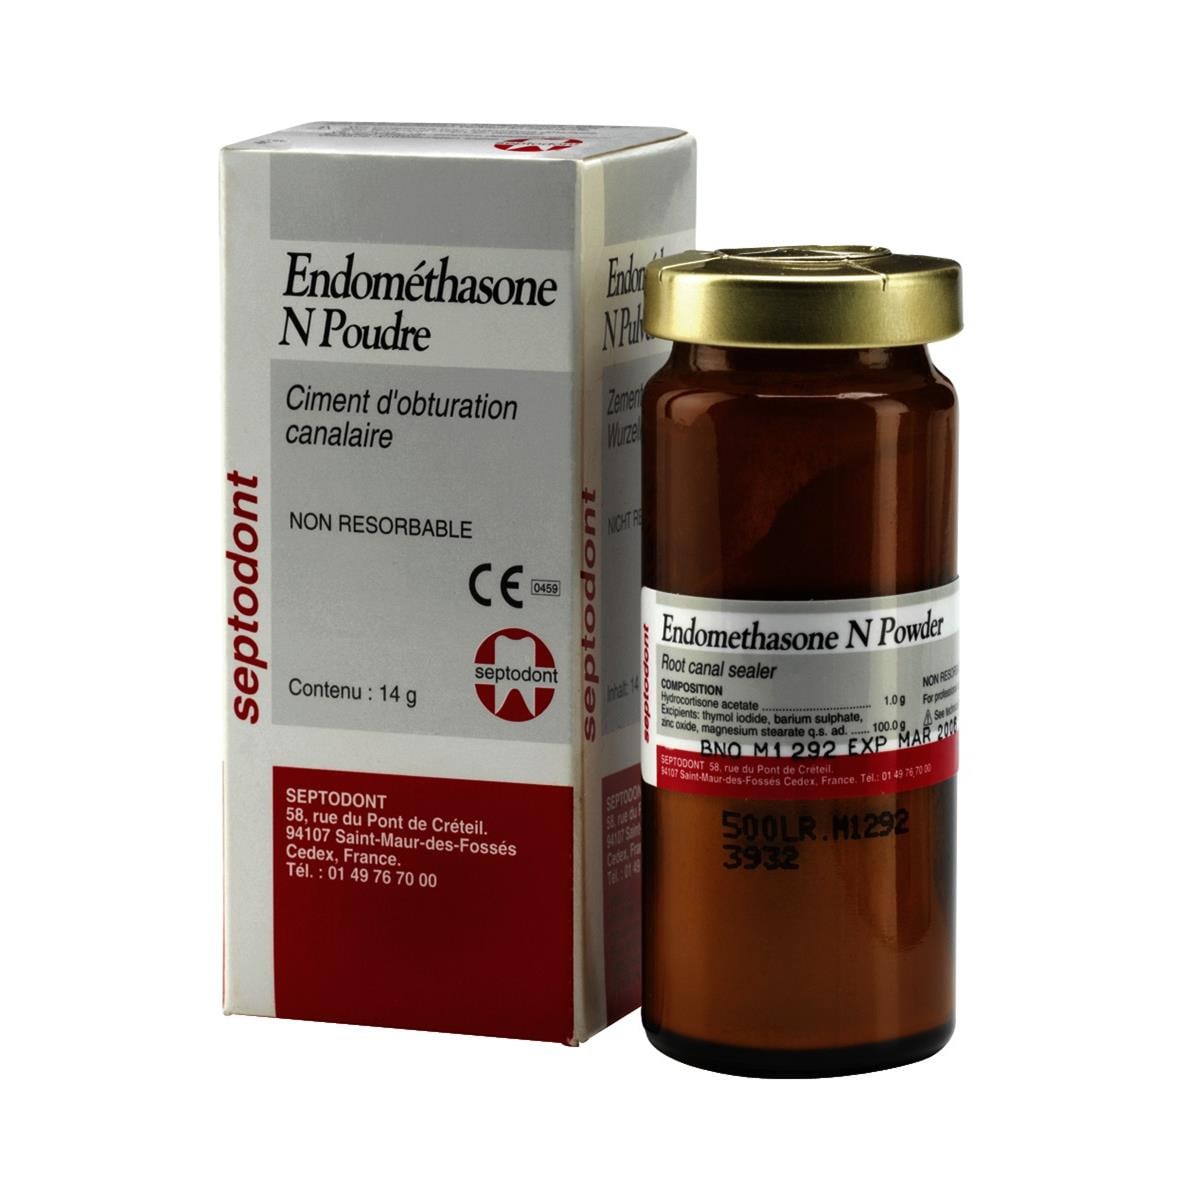 Endomethasone N Powder 14g